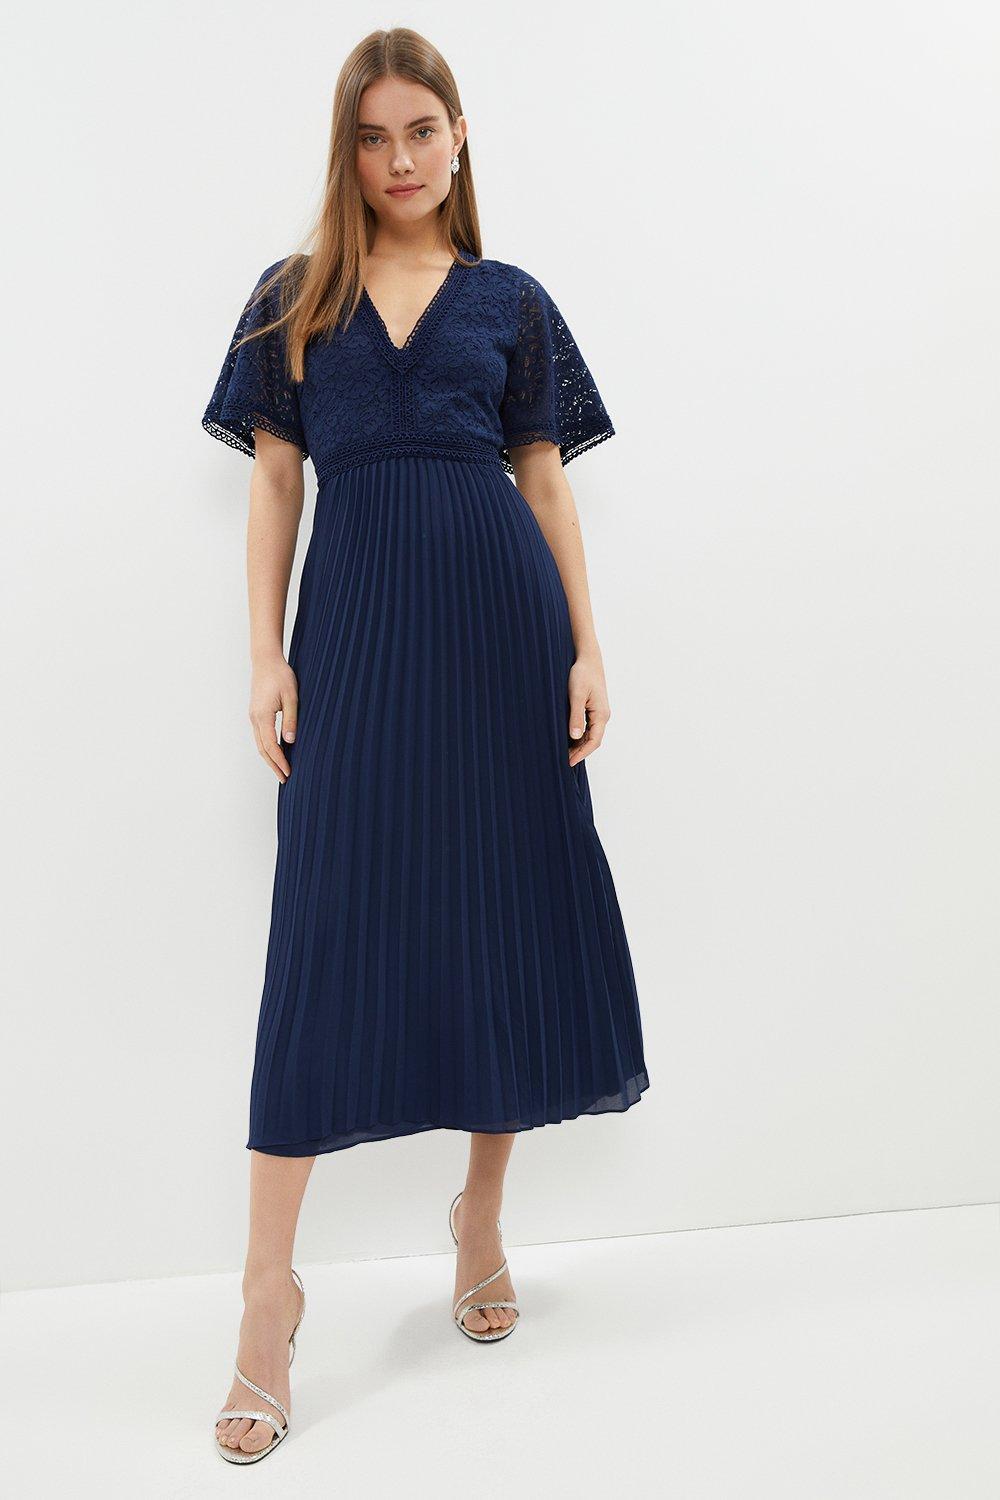 Lace Bodice Angel Sleeve Pleat Skirt Maxi Dress - Navy